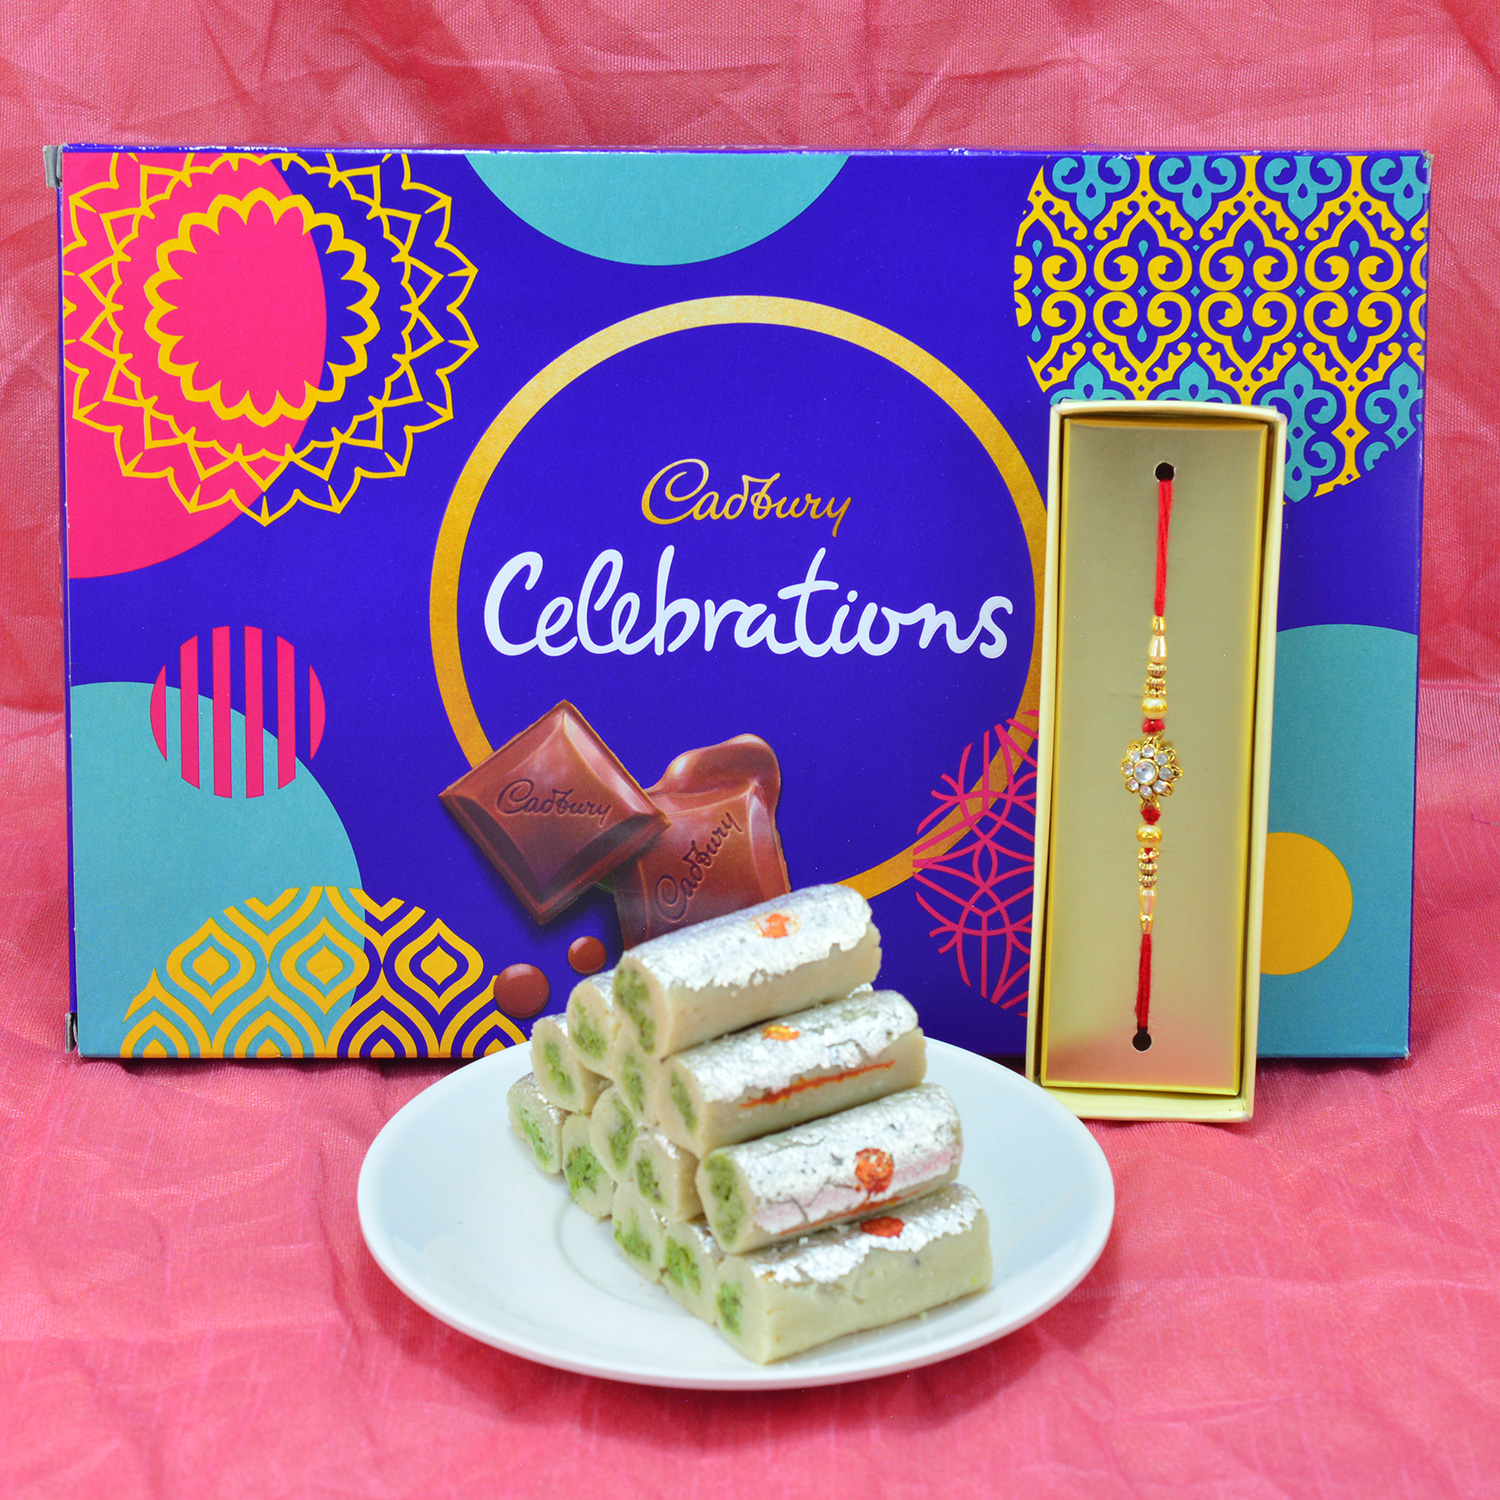 Spectacular Diamond Jewel Rakhi with Delicious Cadbury Celebrations and dainty Kaju Roll